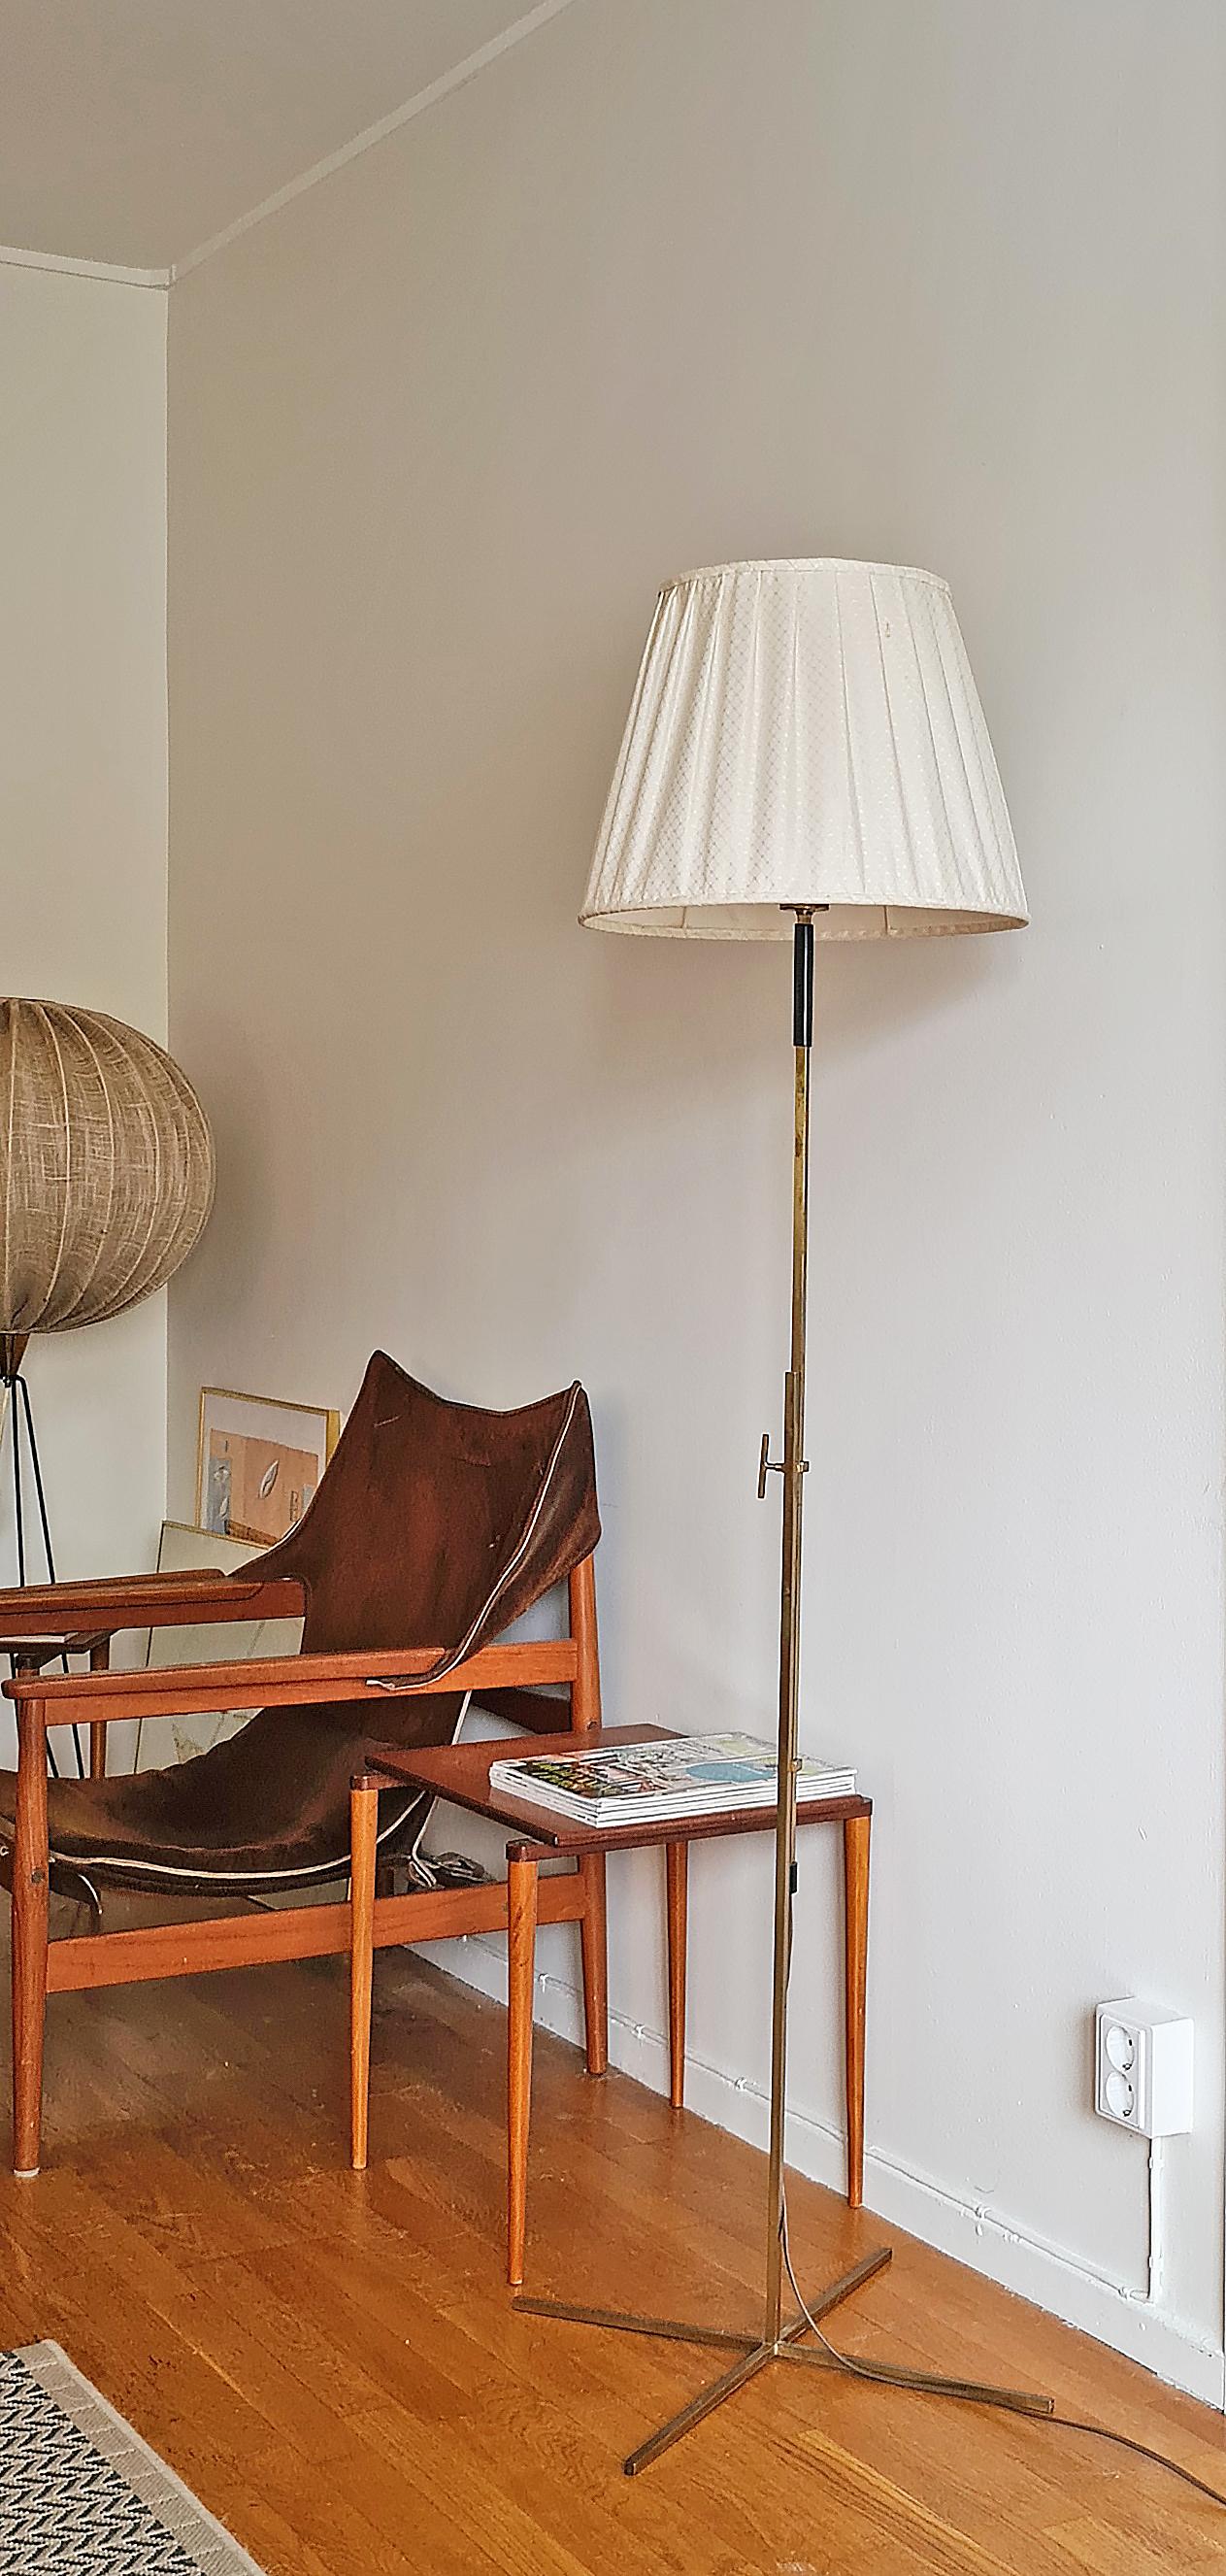 Mid-20th Century Scandinavian Modern Floor Lamp in Brass from Lilux, Sweden 1960s For Sale